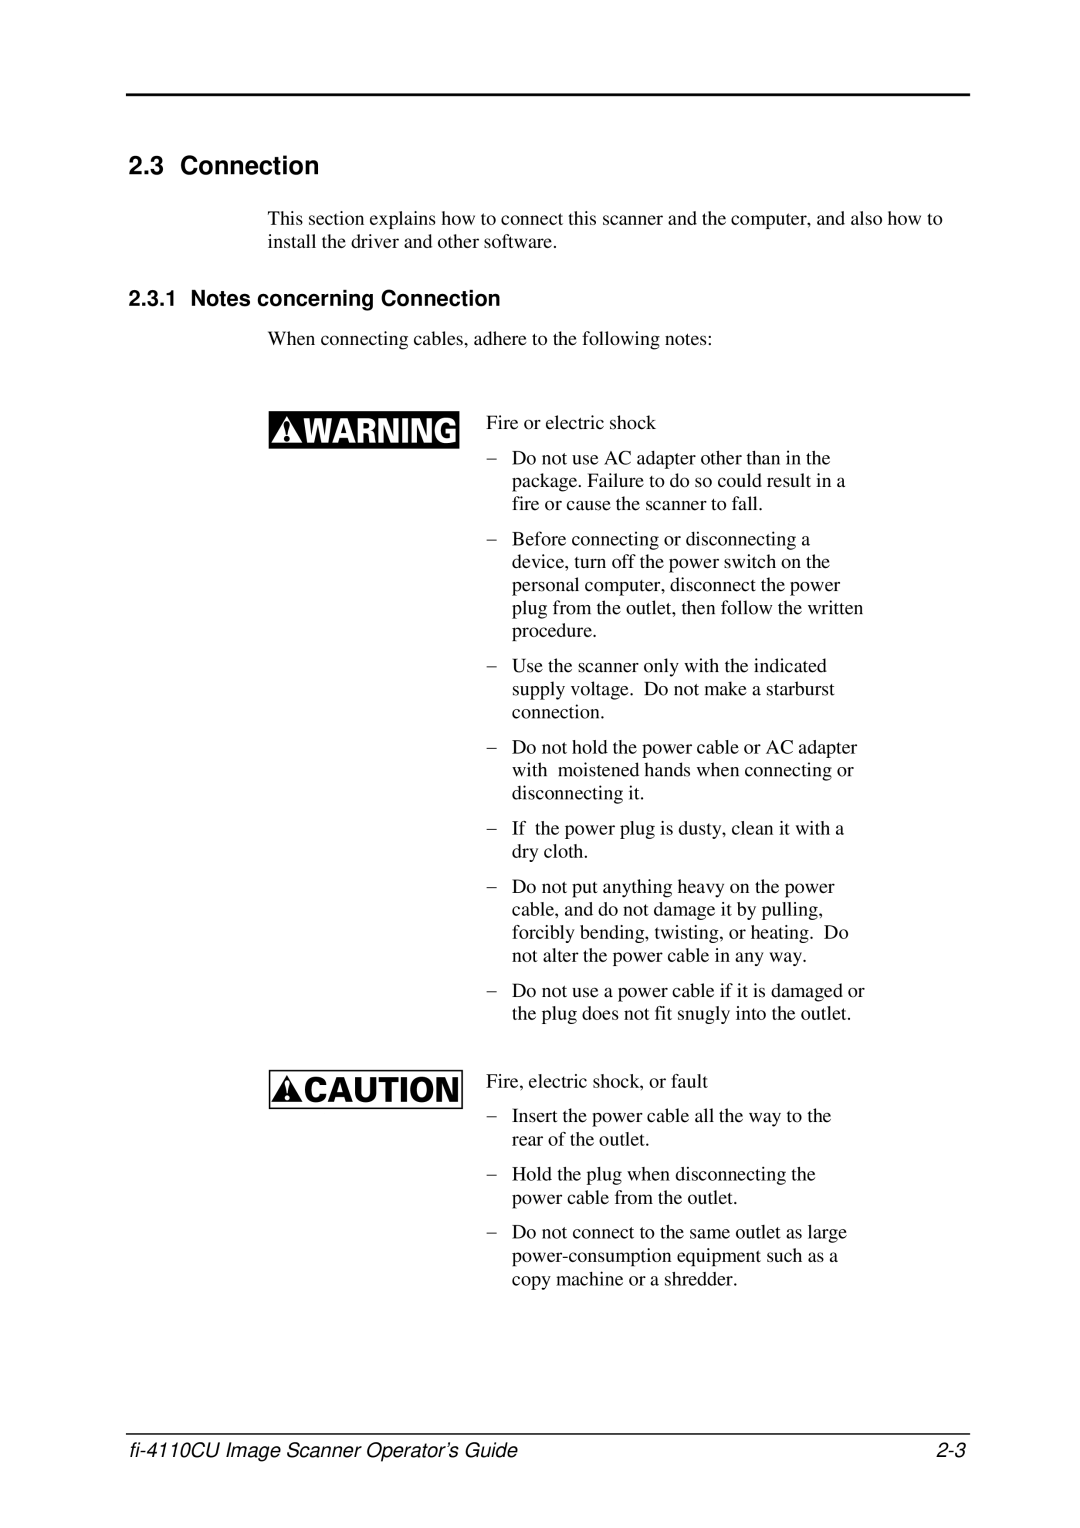 Fujitsu C150-E194-01EN manual Notes concerning Connection, fi-4110CU Image Scanner Operator’s Guide 